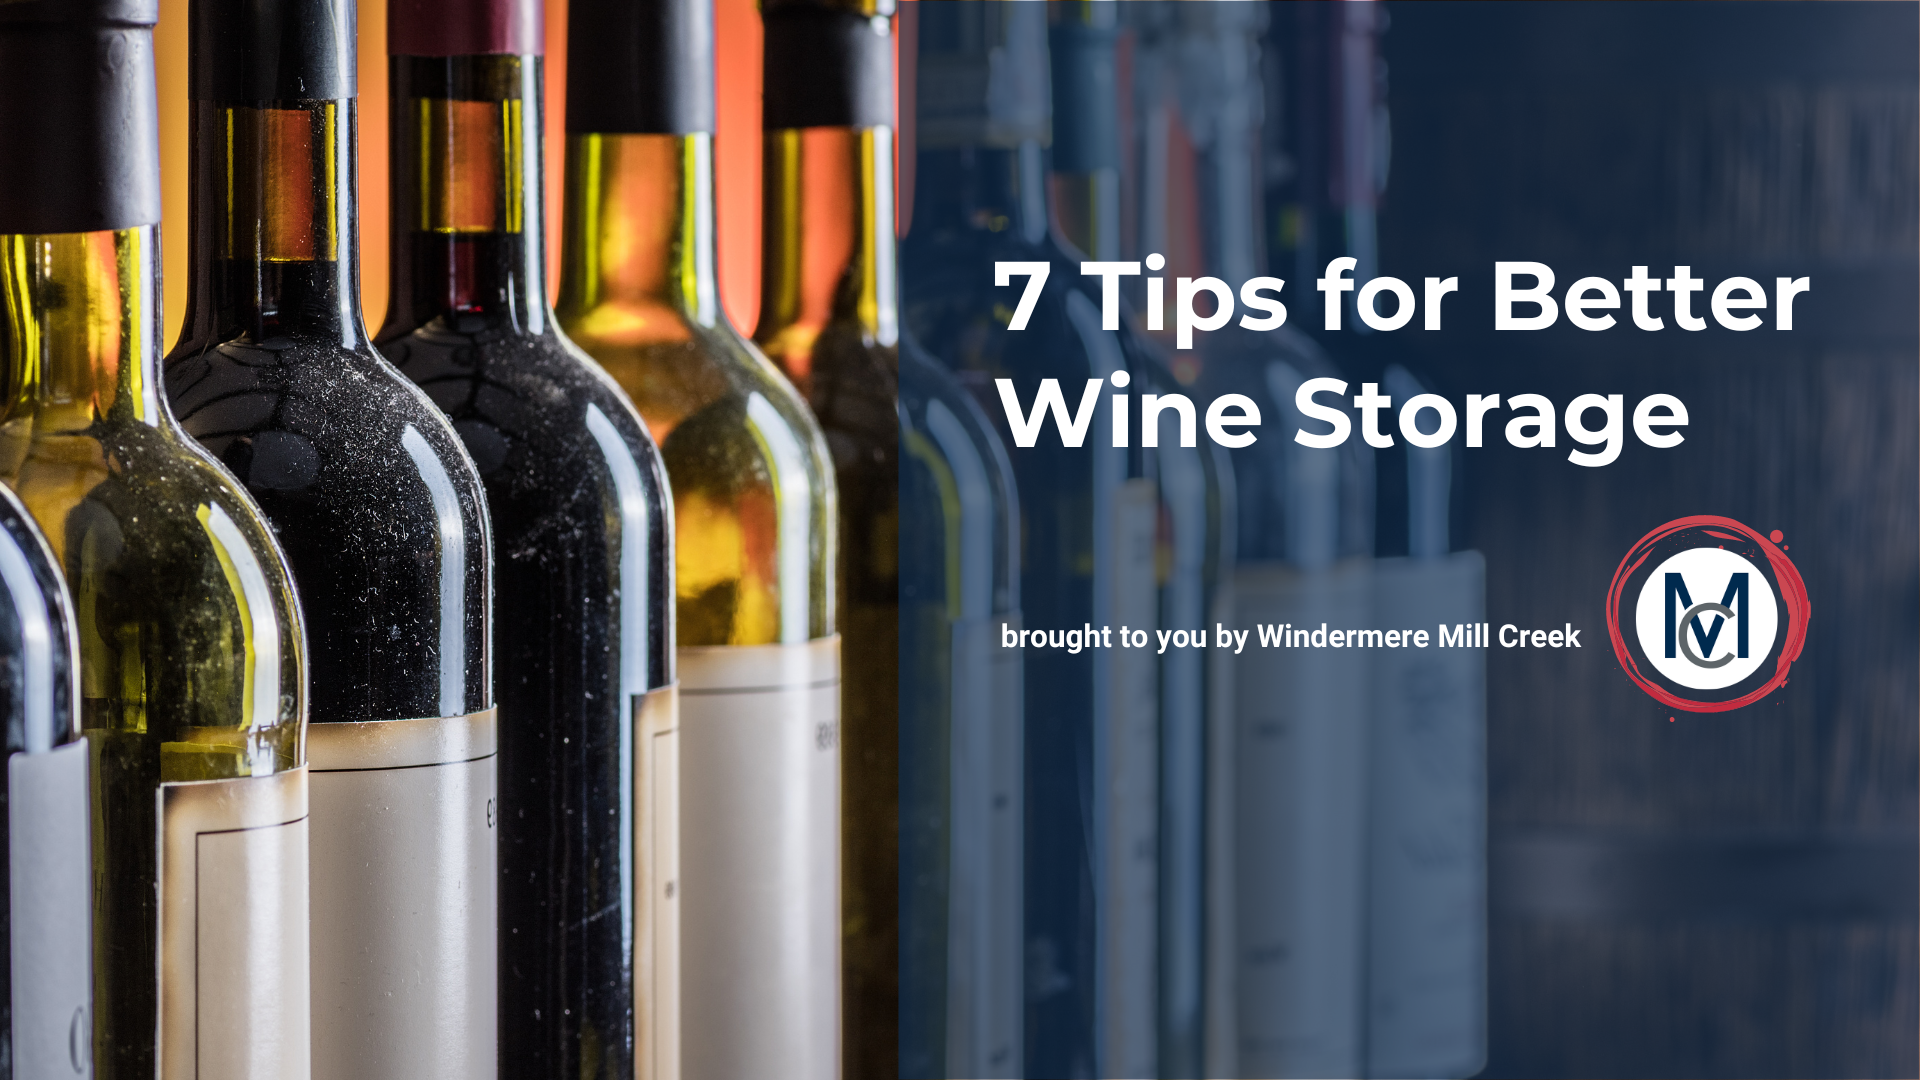 7 Wine Storage Tips by Windermere Mill Creek